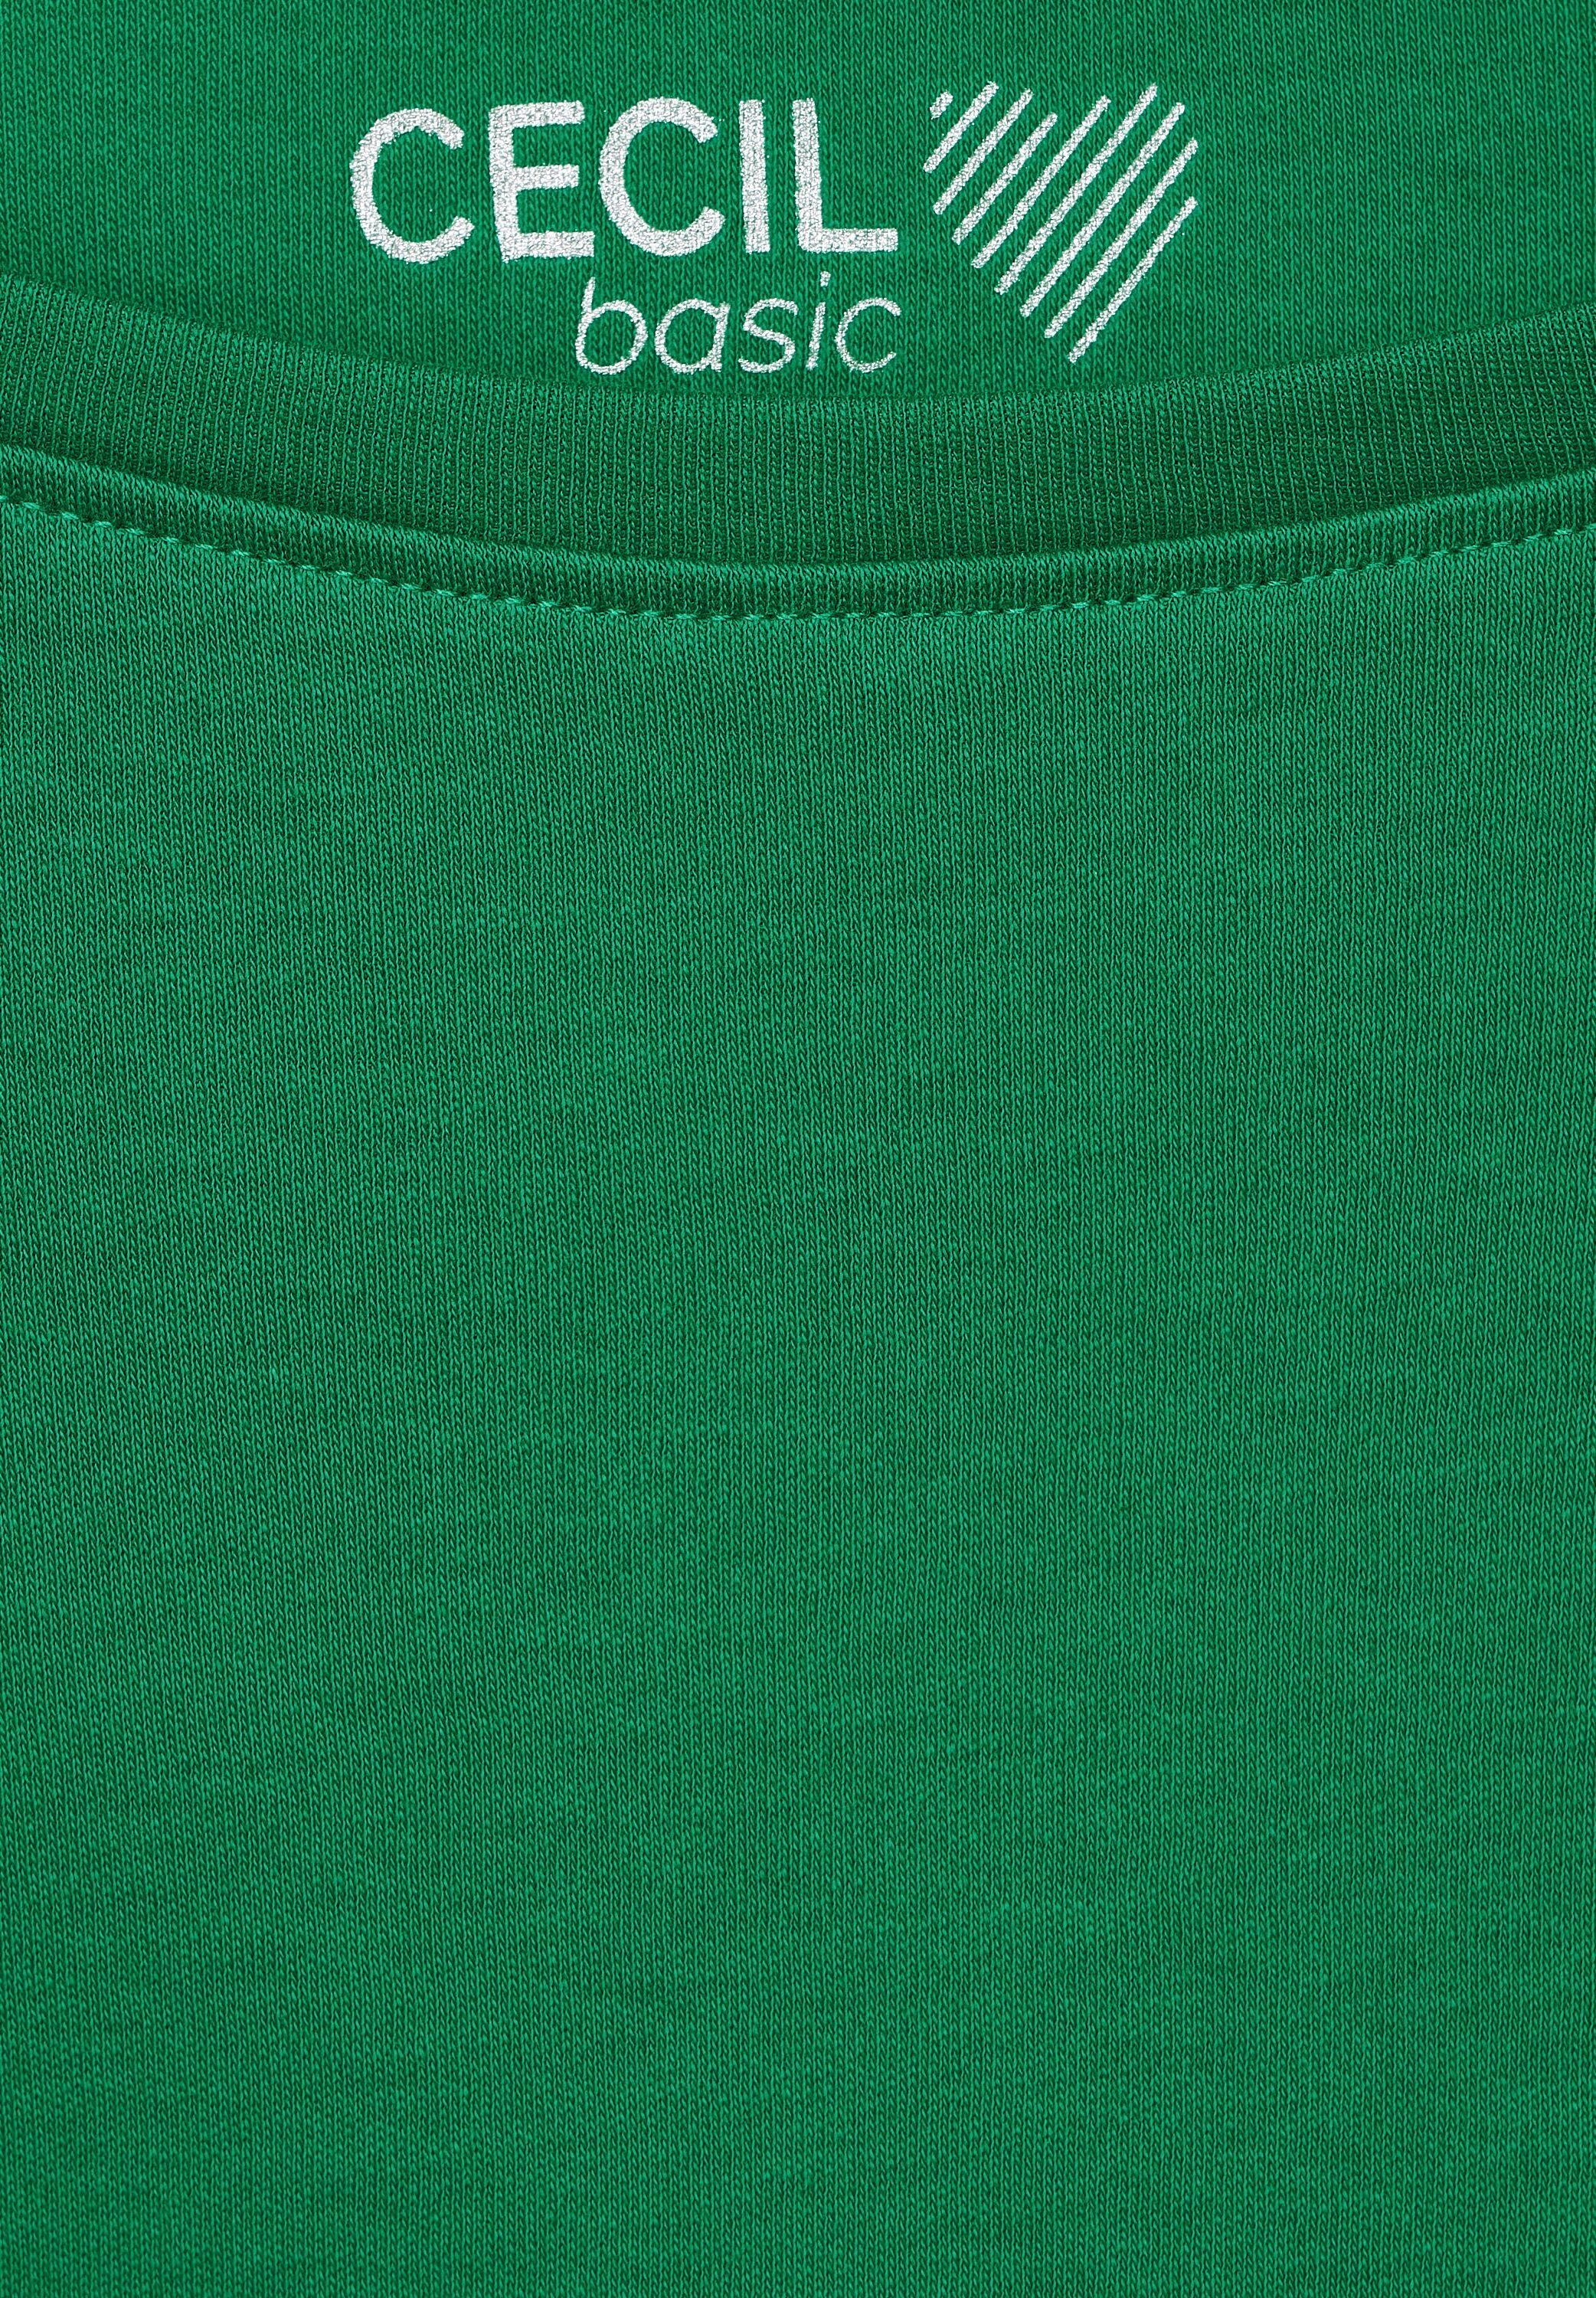 Cecil 3/4-Arm-Shirt Basic in green Shirt in easy Unifarbe Unifarbe